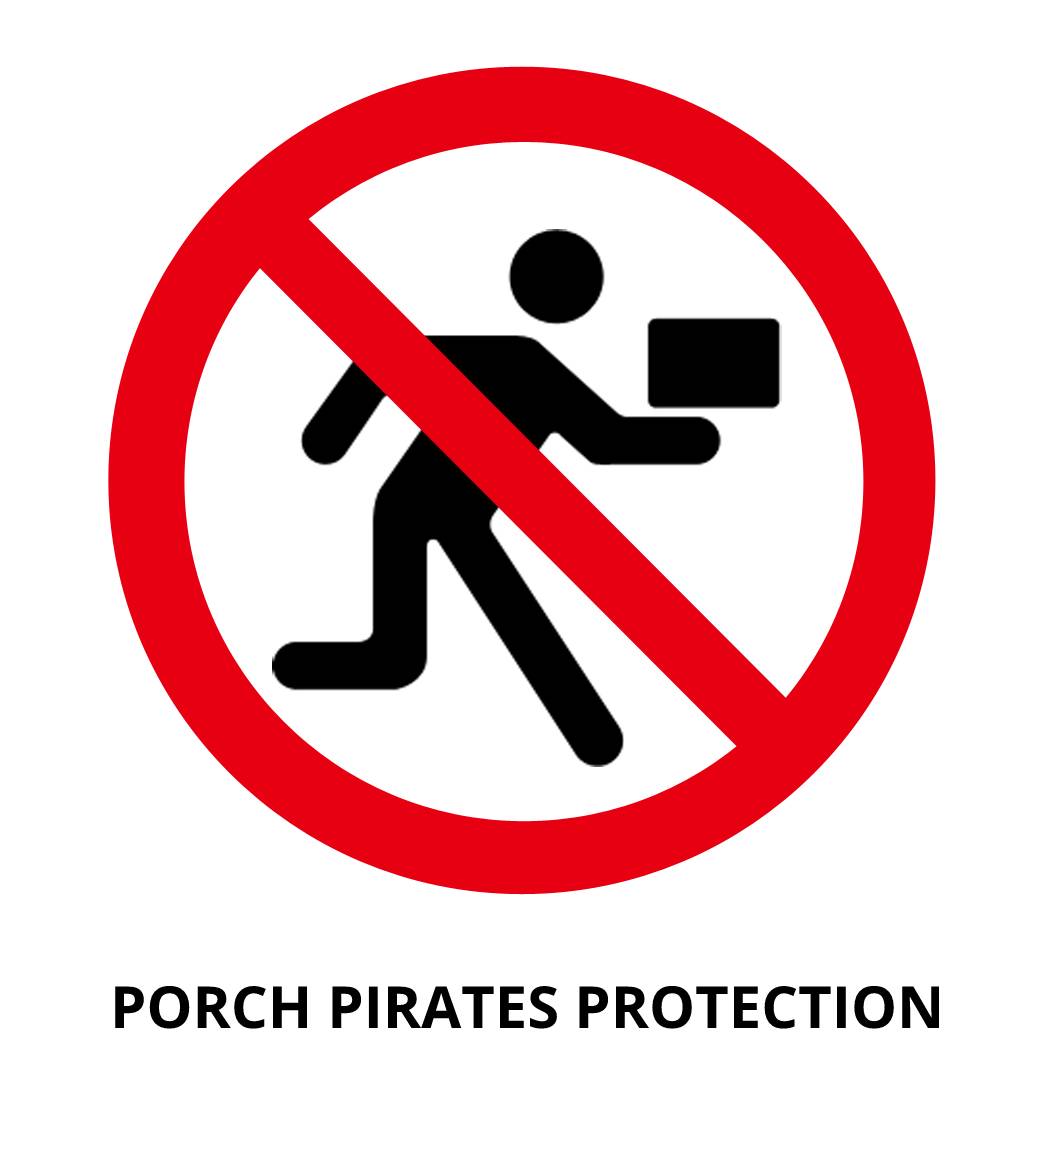 Porch Pirates Protection (rfm)